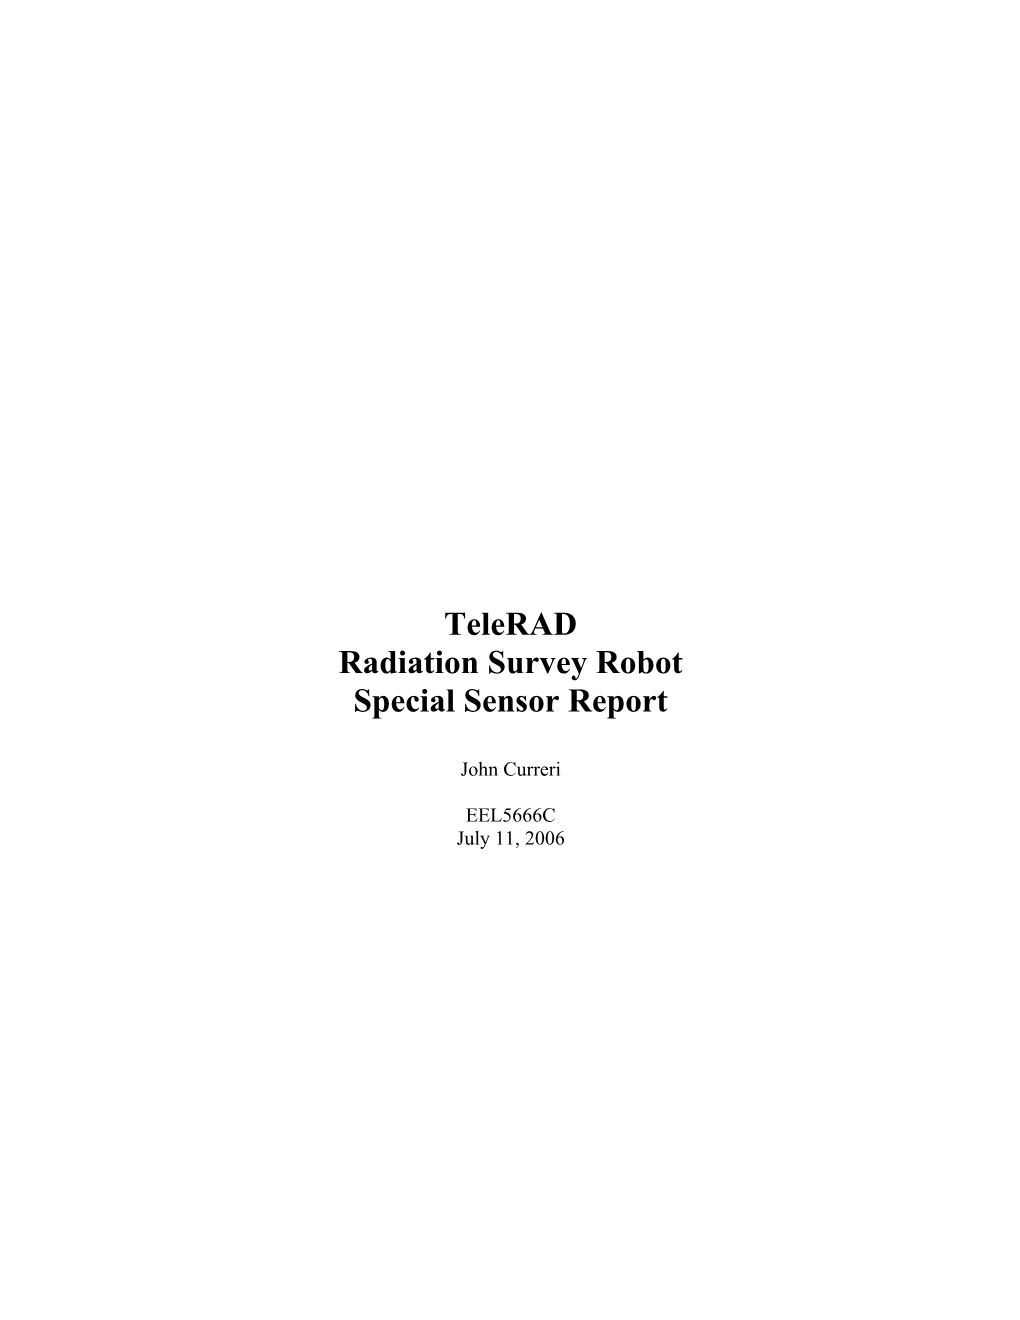 Radiation Survey Robot